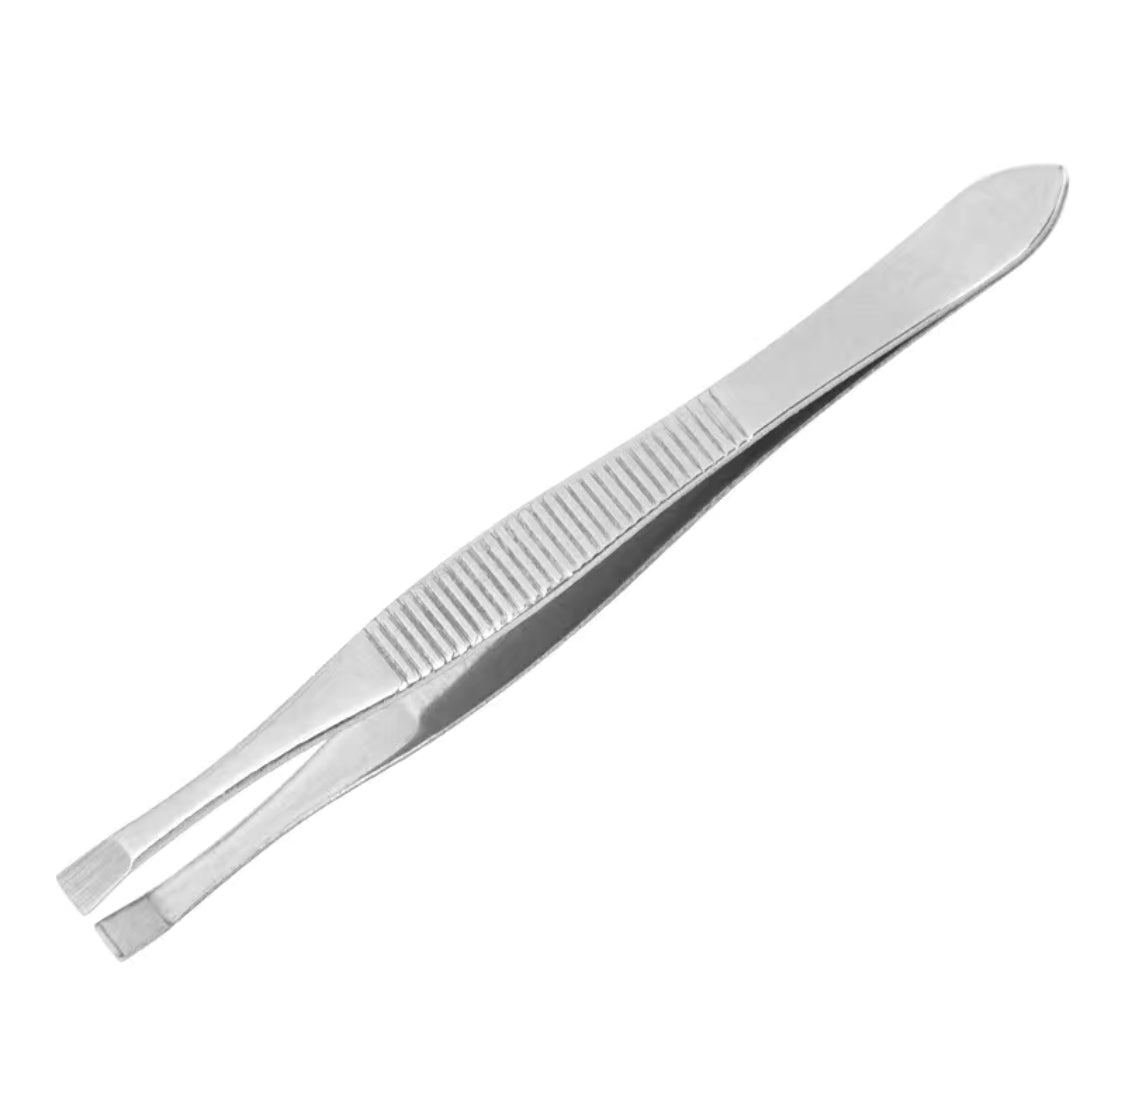 Professional Flat Tip Tweezers, Stainless Steel